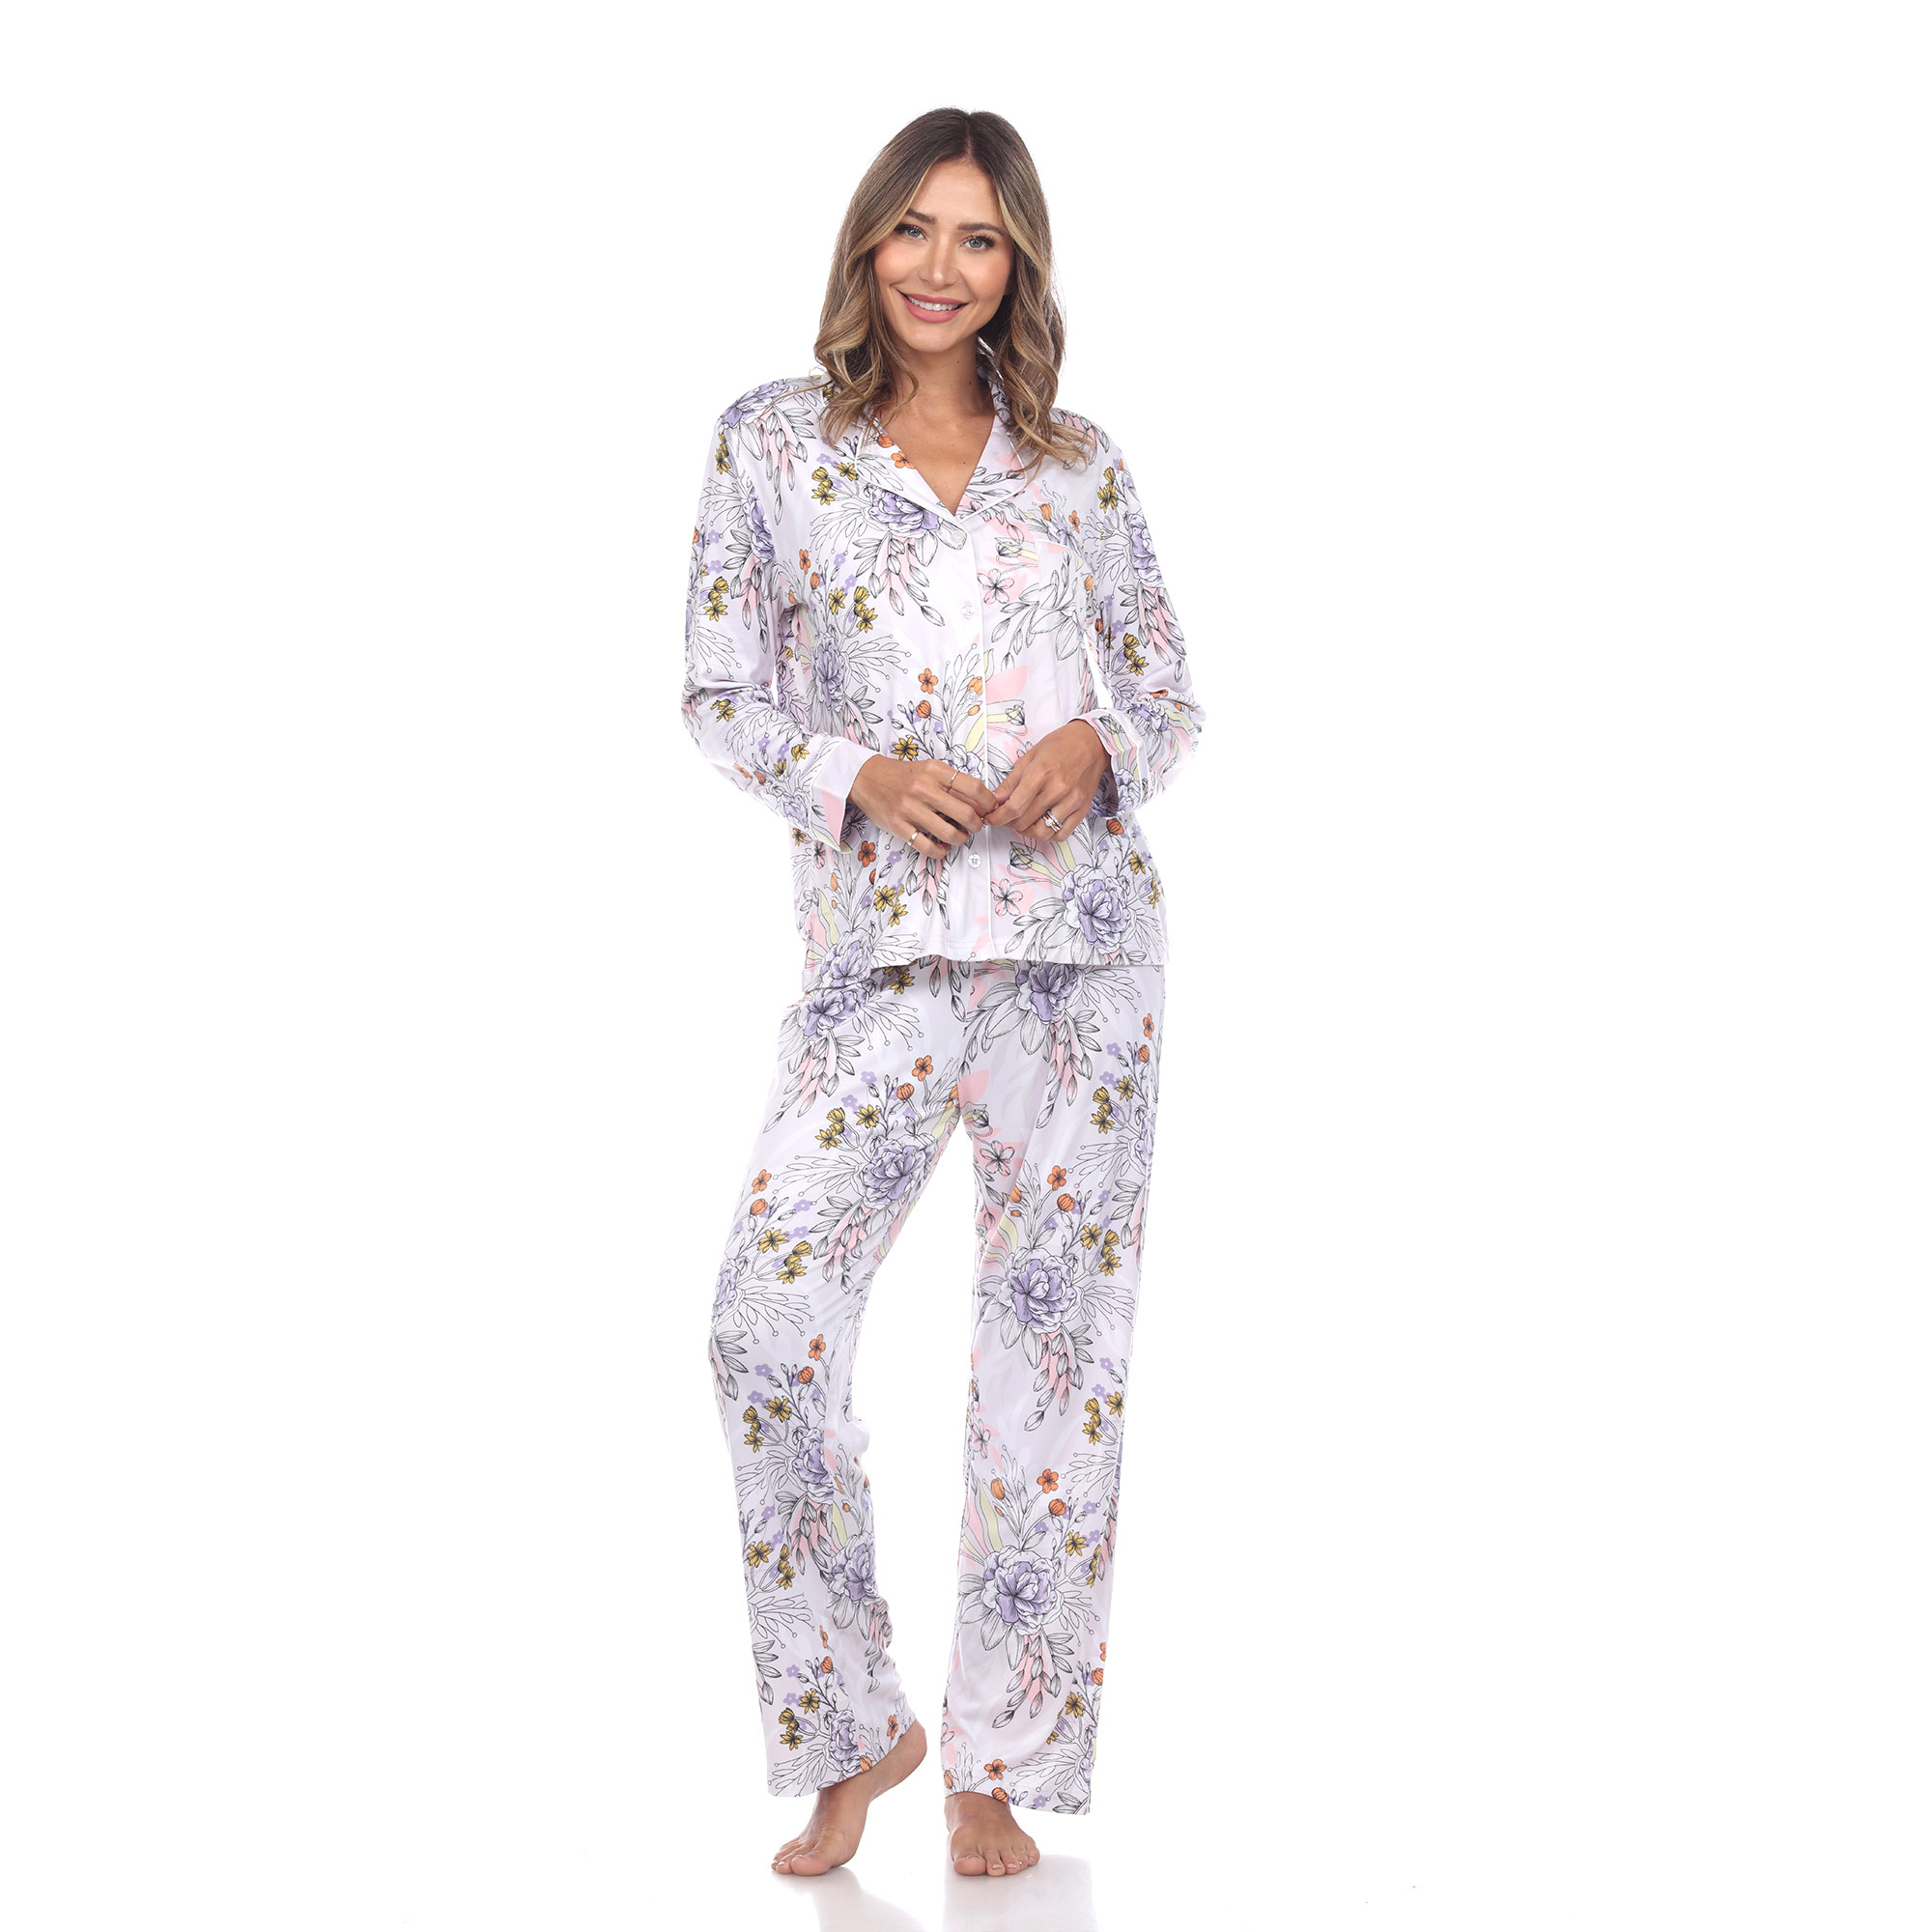 White Mark Women's Long Sleeve Floral Pajama Set - Lavender, 1X